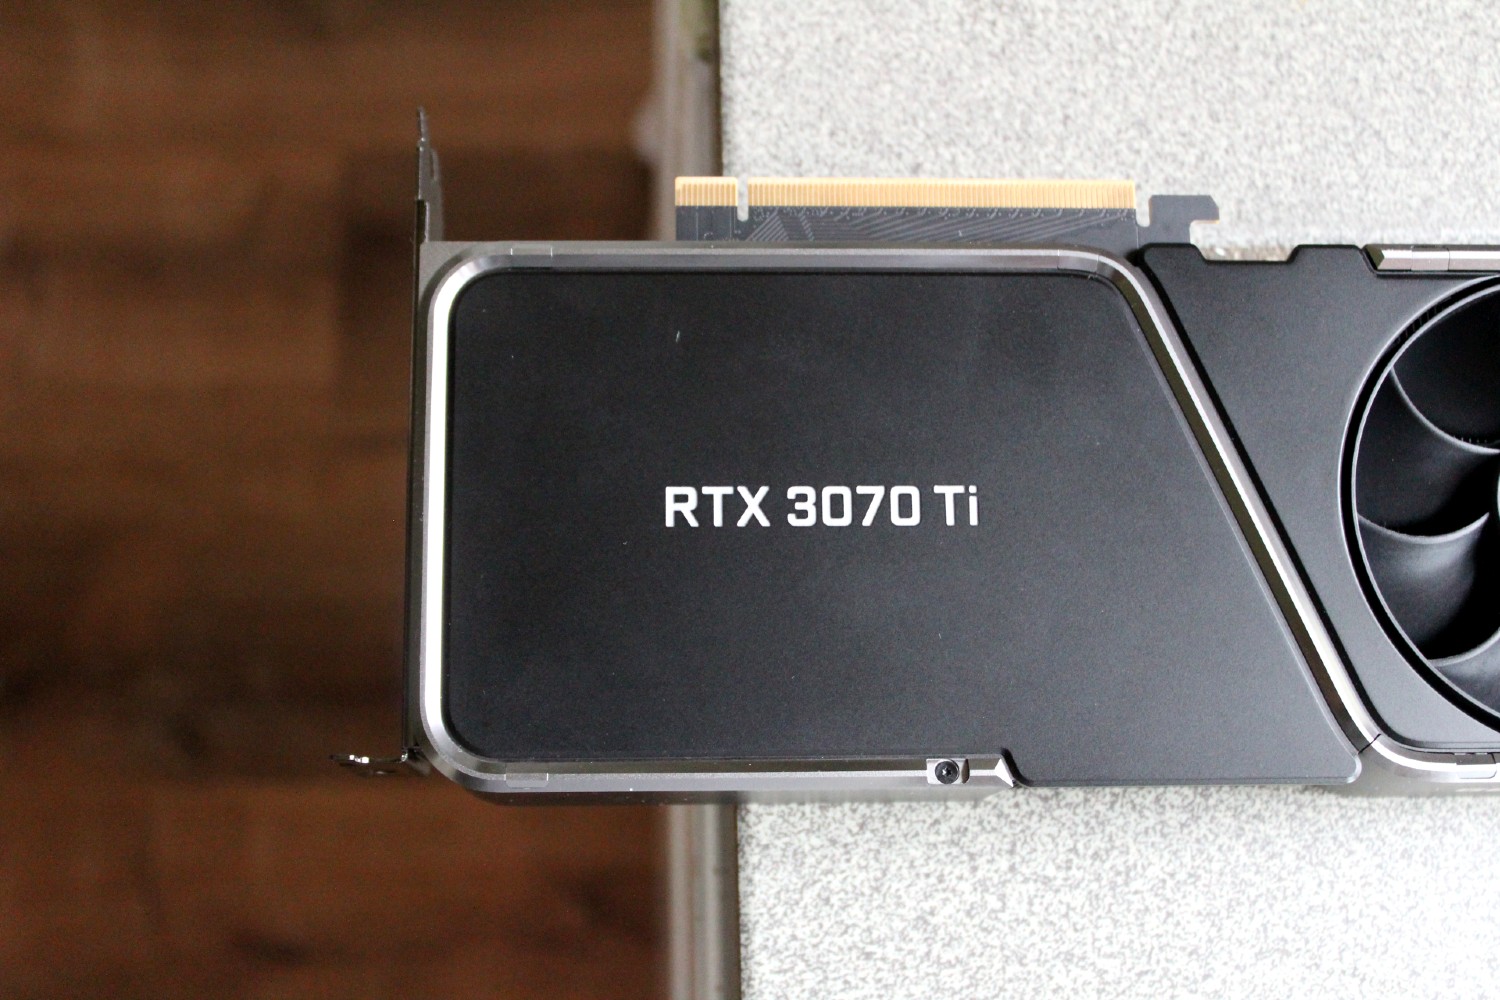 GeForce RTX 3070 Ti vs. Radeon RX 6800: 52 Game Benchmark